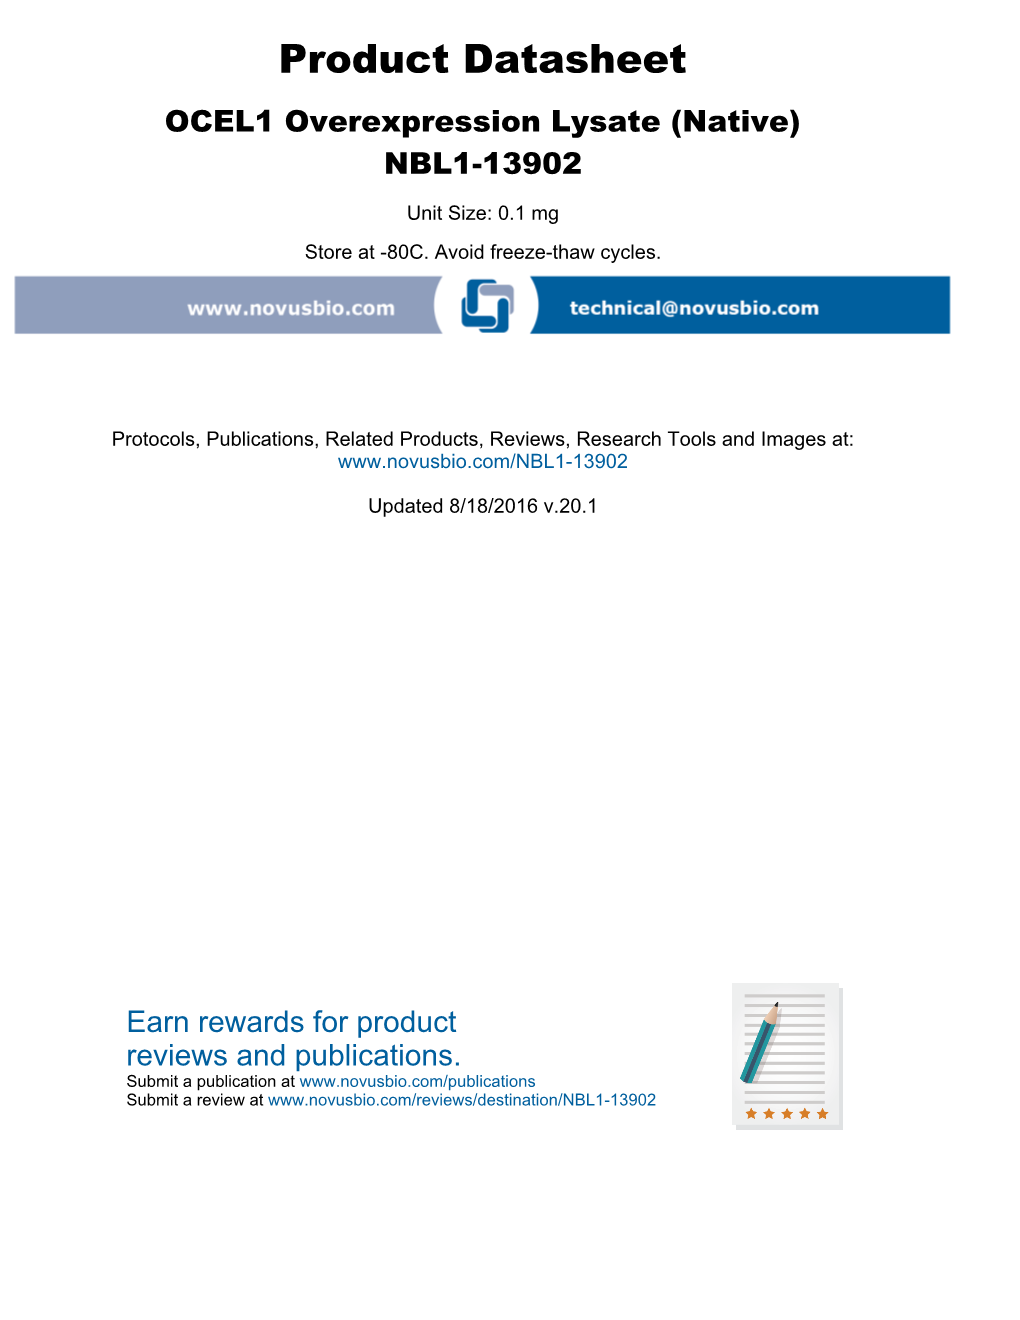 Product Datasheet OCEL1 Overexpression Lysate (Native) NBL1